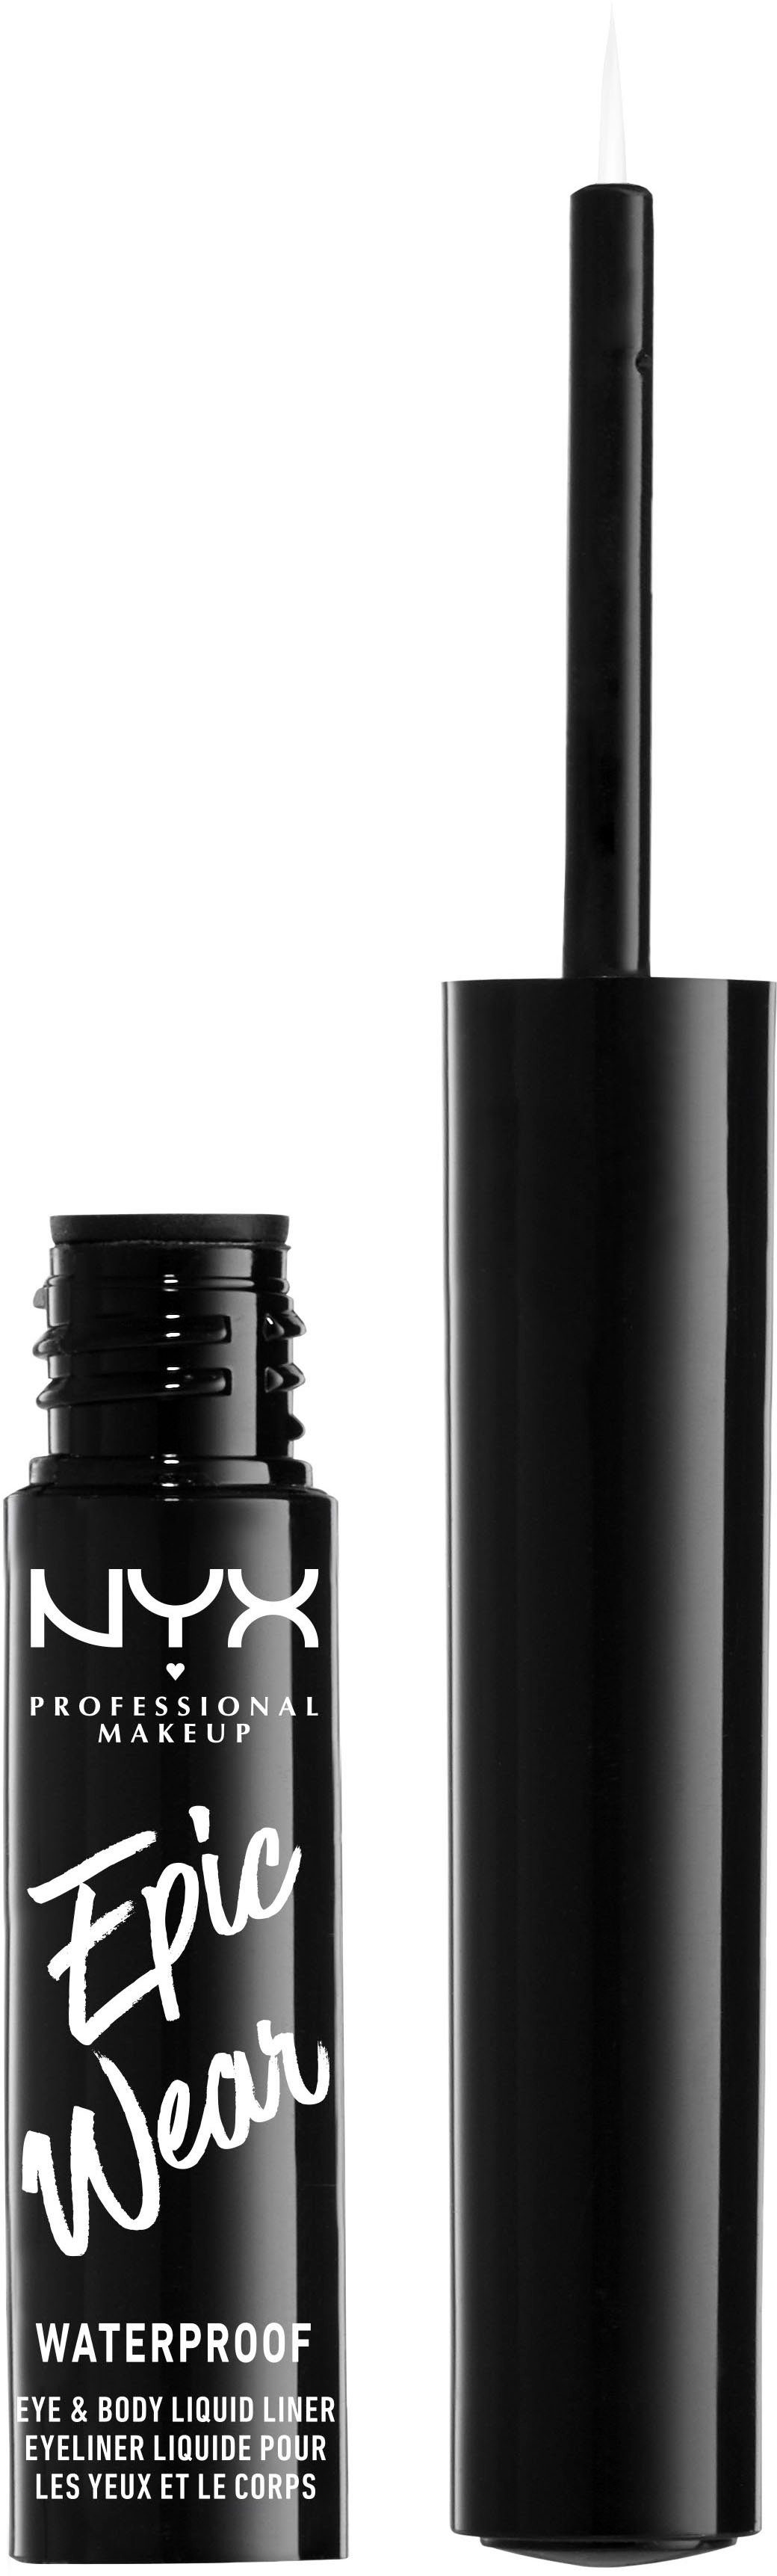 NYX Eyeliner Professional 04 White Waterproof Makeup Liquid Wear Liner, Epic